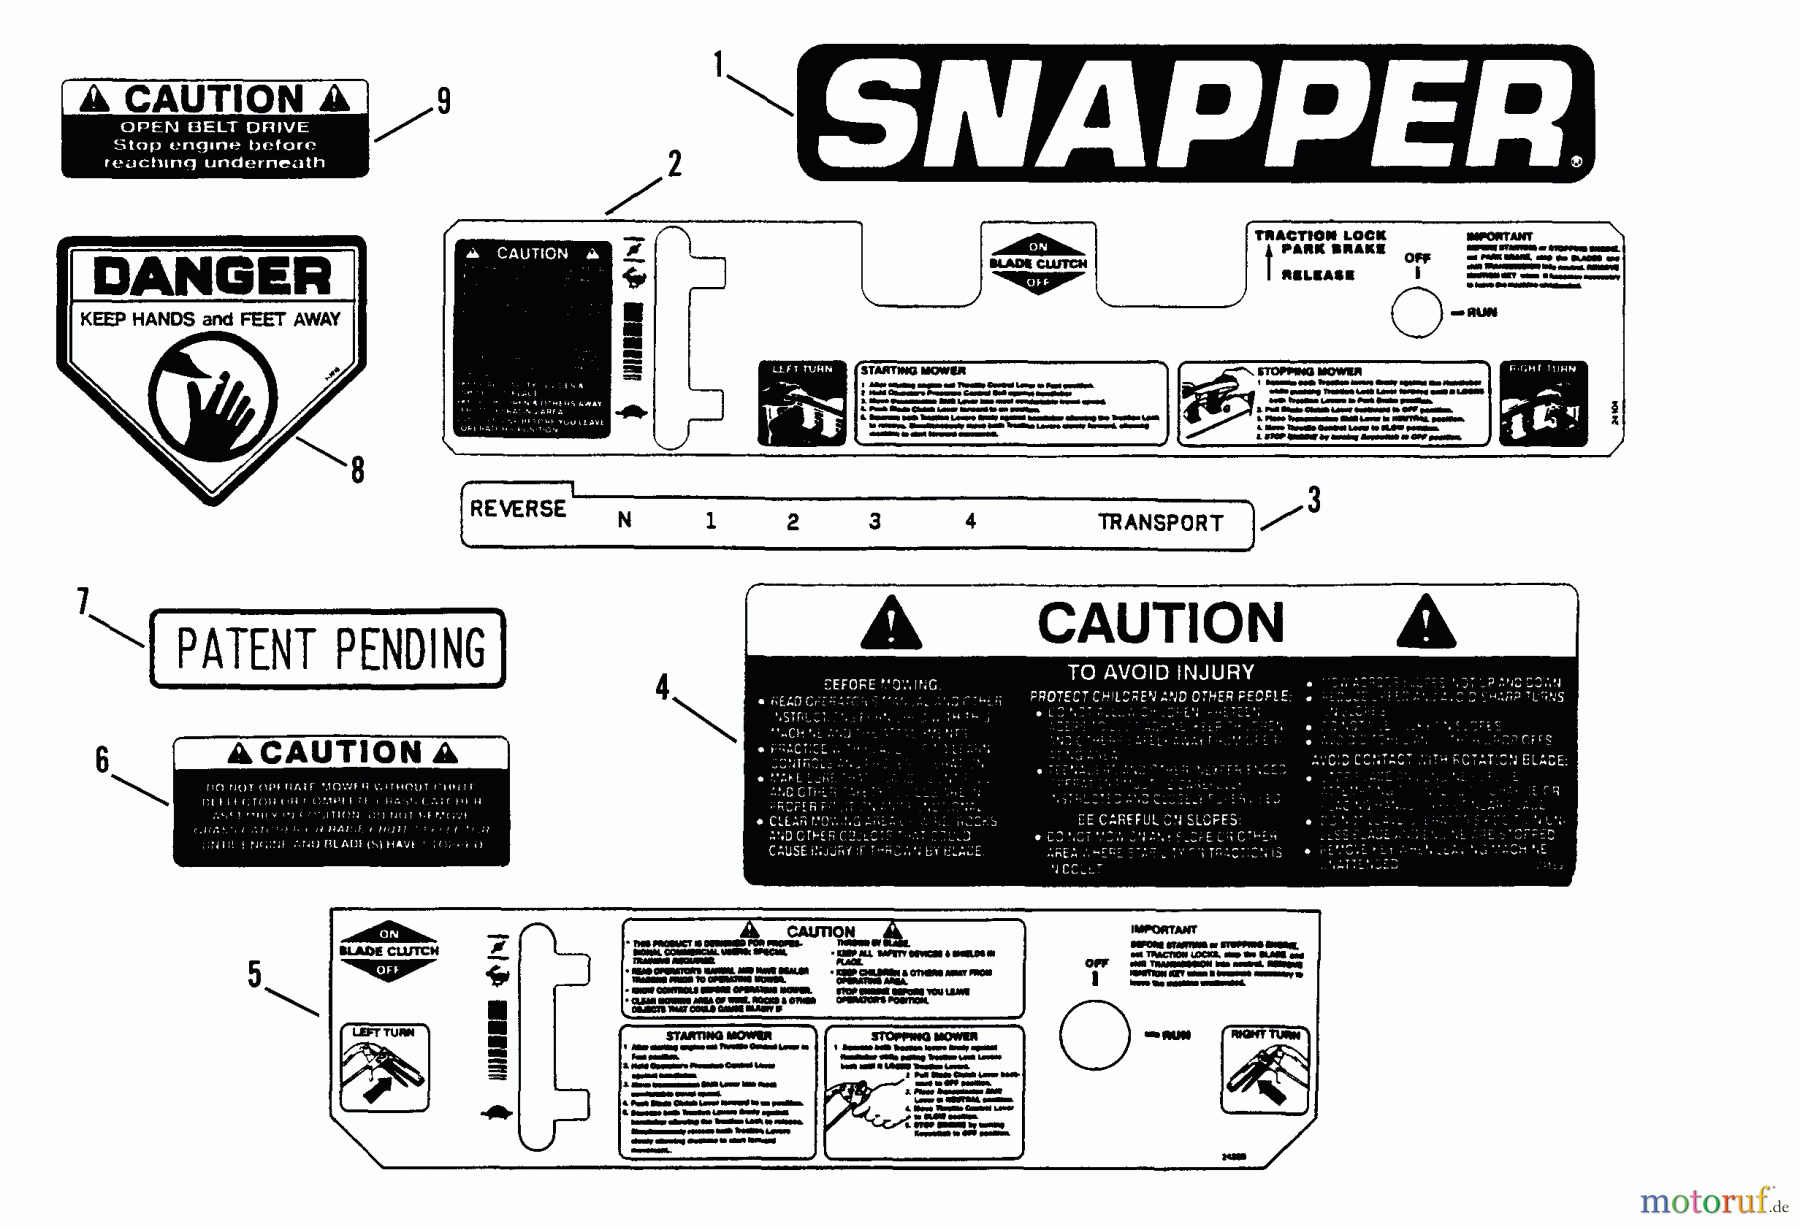  Snapper Rasenmäher für Großflächen PL71252KV - Snapper Wide-Area Walk-Behind Mower, 12.5 HP, Gear Drive, Loop Handle, Series 2 Decals